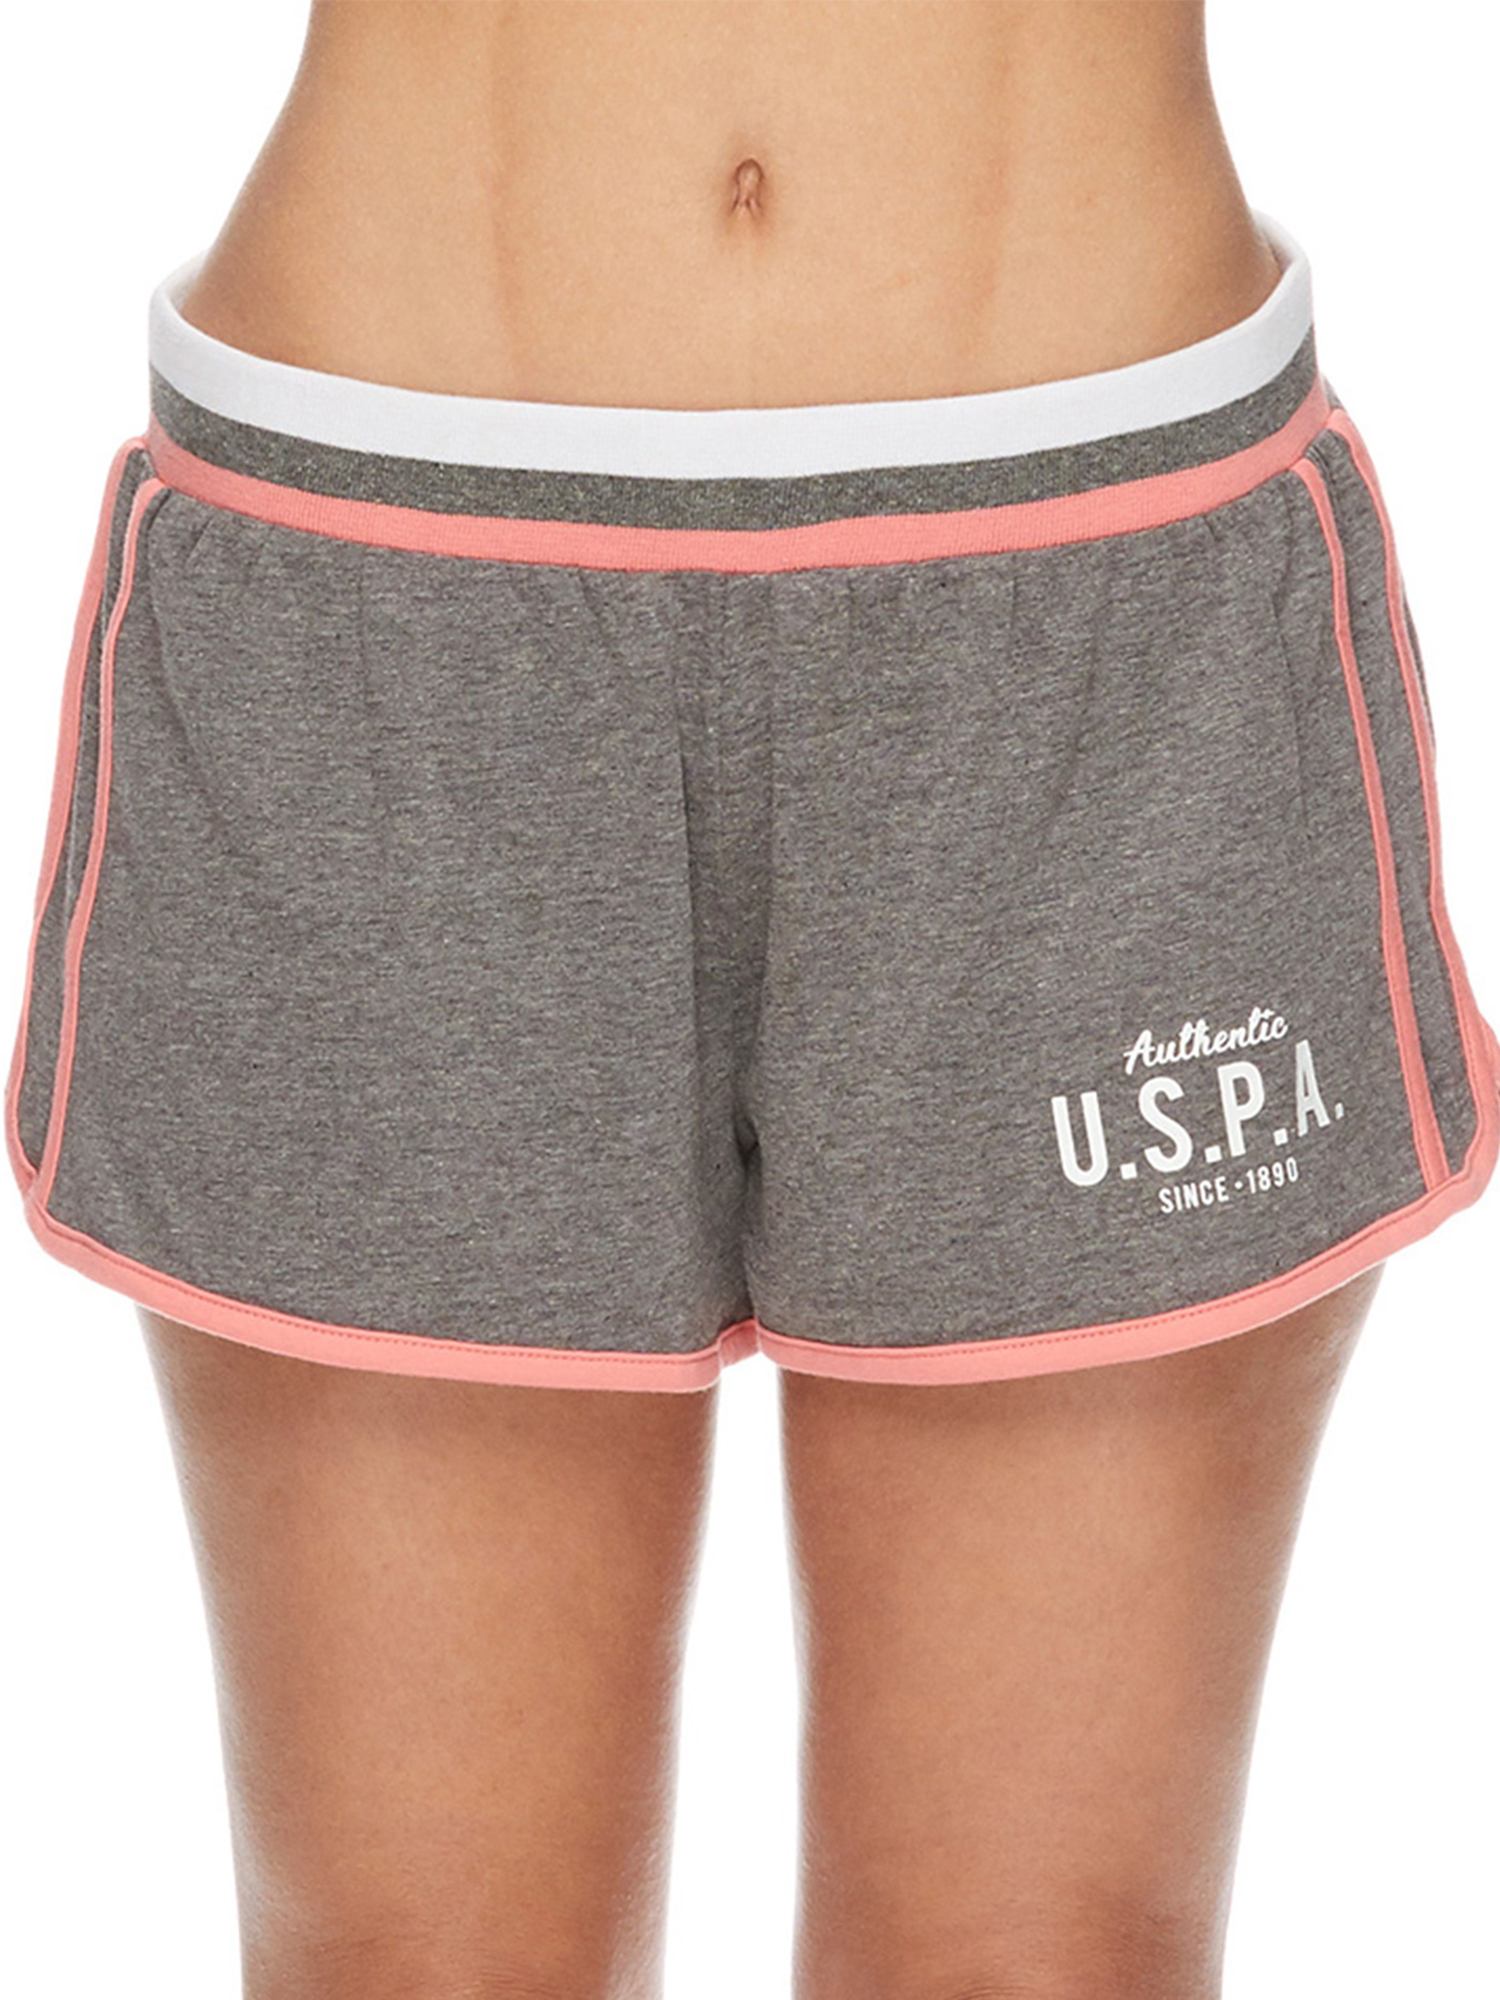 U.S. Polo Assn. Women's 2pc Tank Top and Shorts Lounge Pajama Sleep Set with U.S.P.A. Logo - image 5 of 6